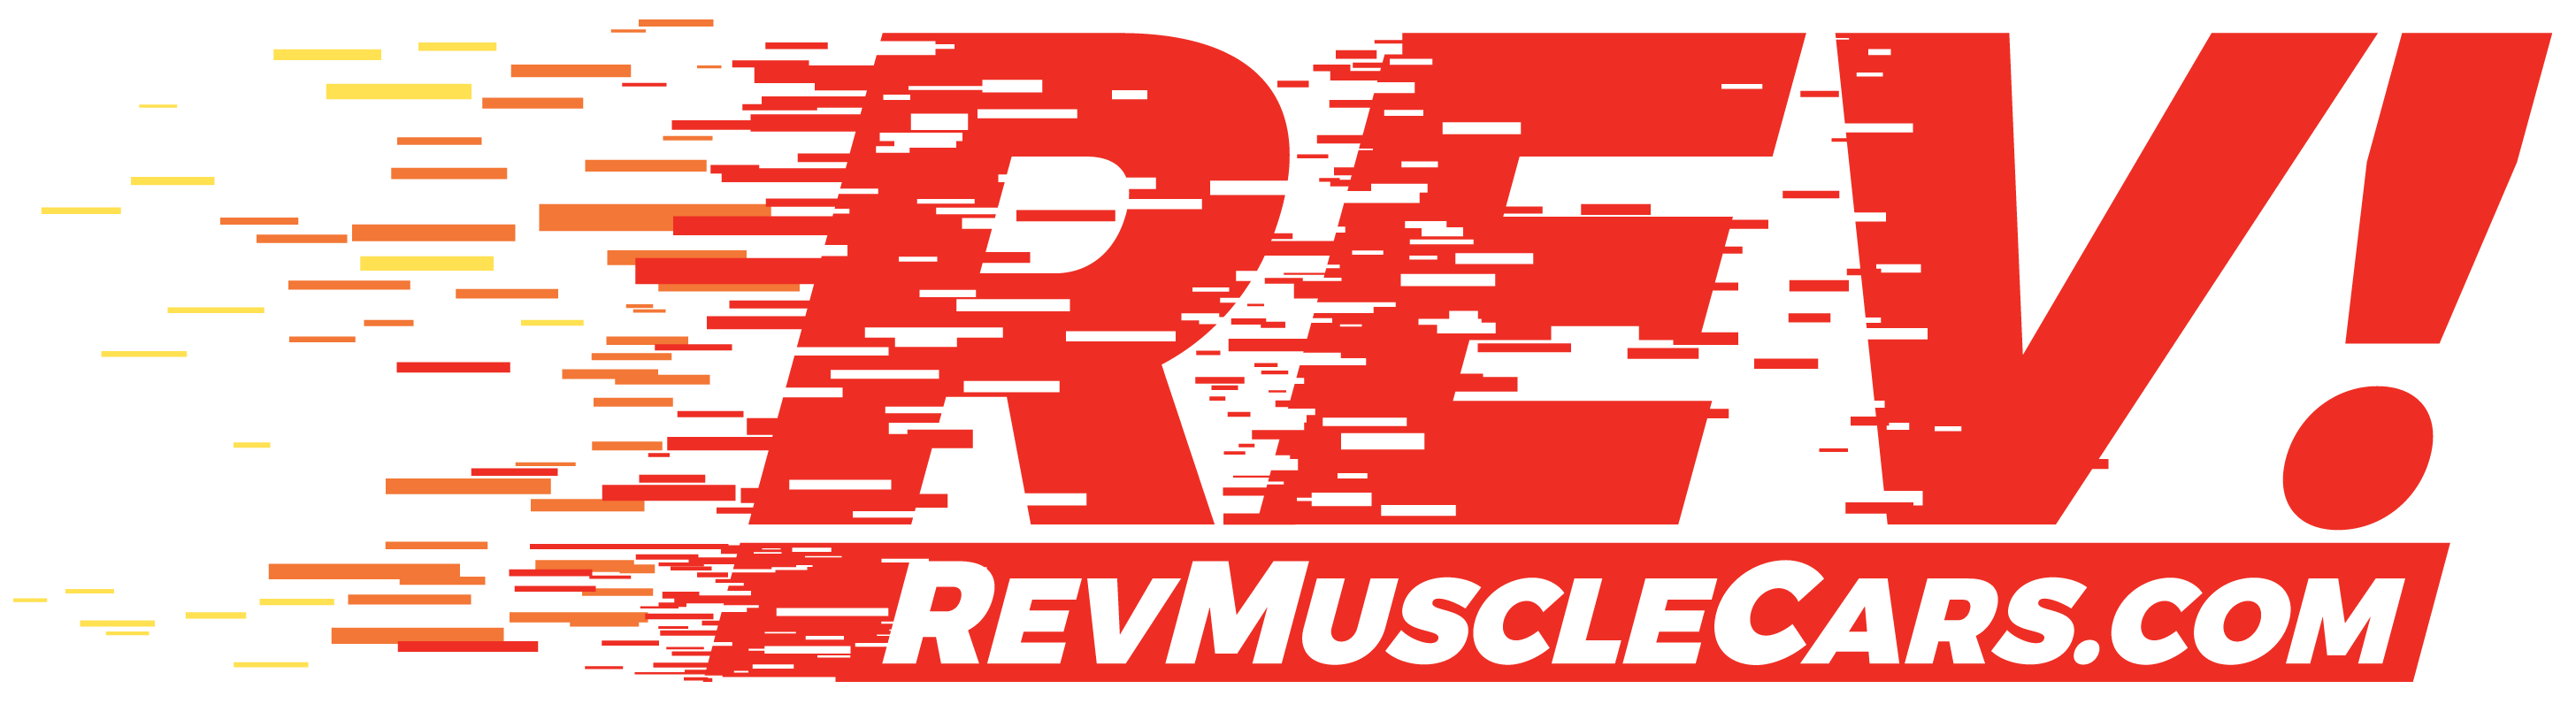 Rev muscle cars glitch logo red transparentbg